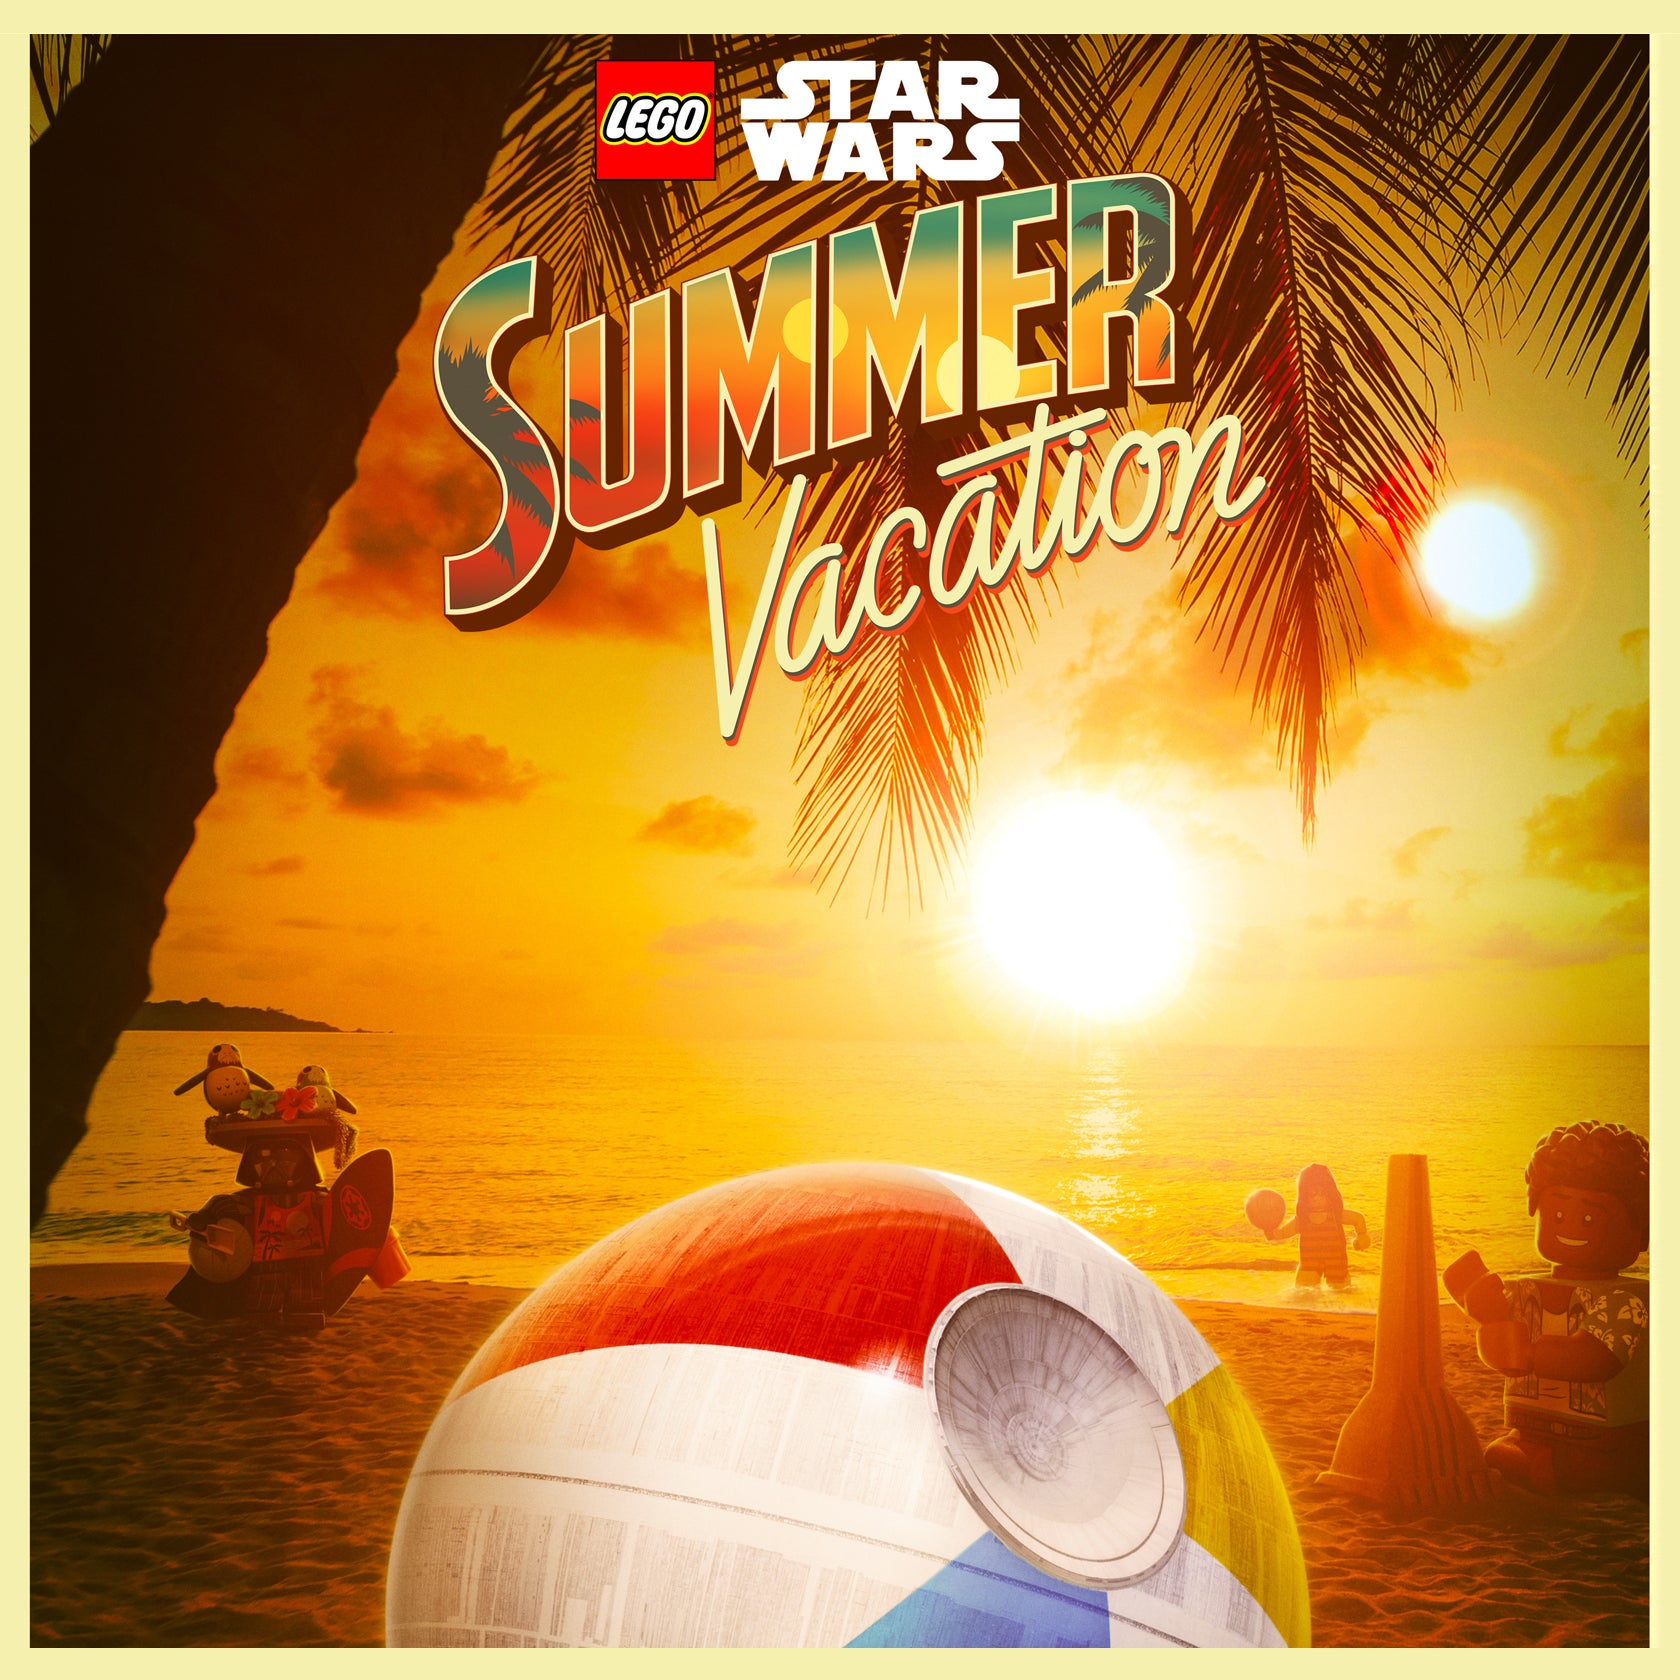 LEGO Star Wars Summer Vacation Revealed